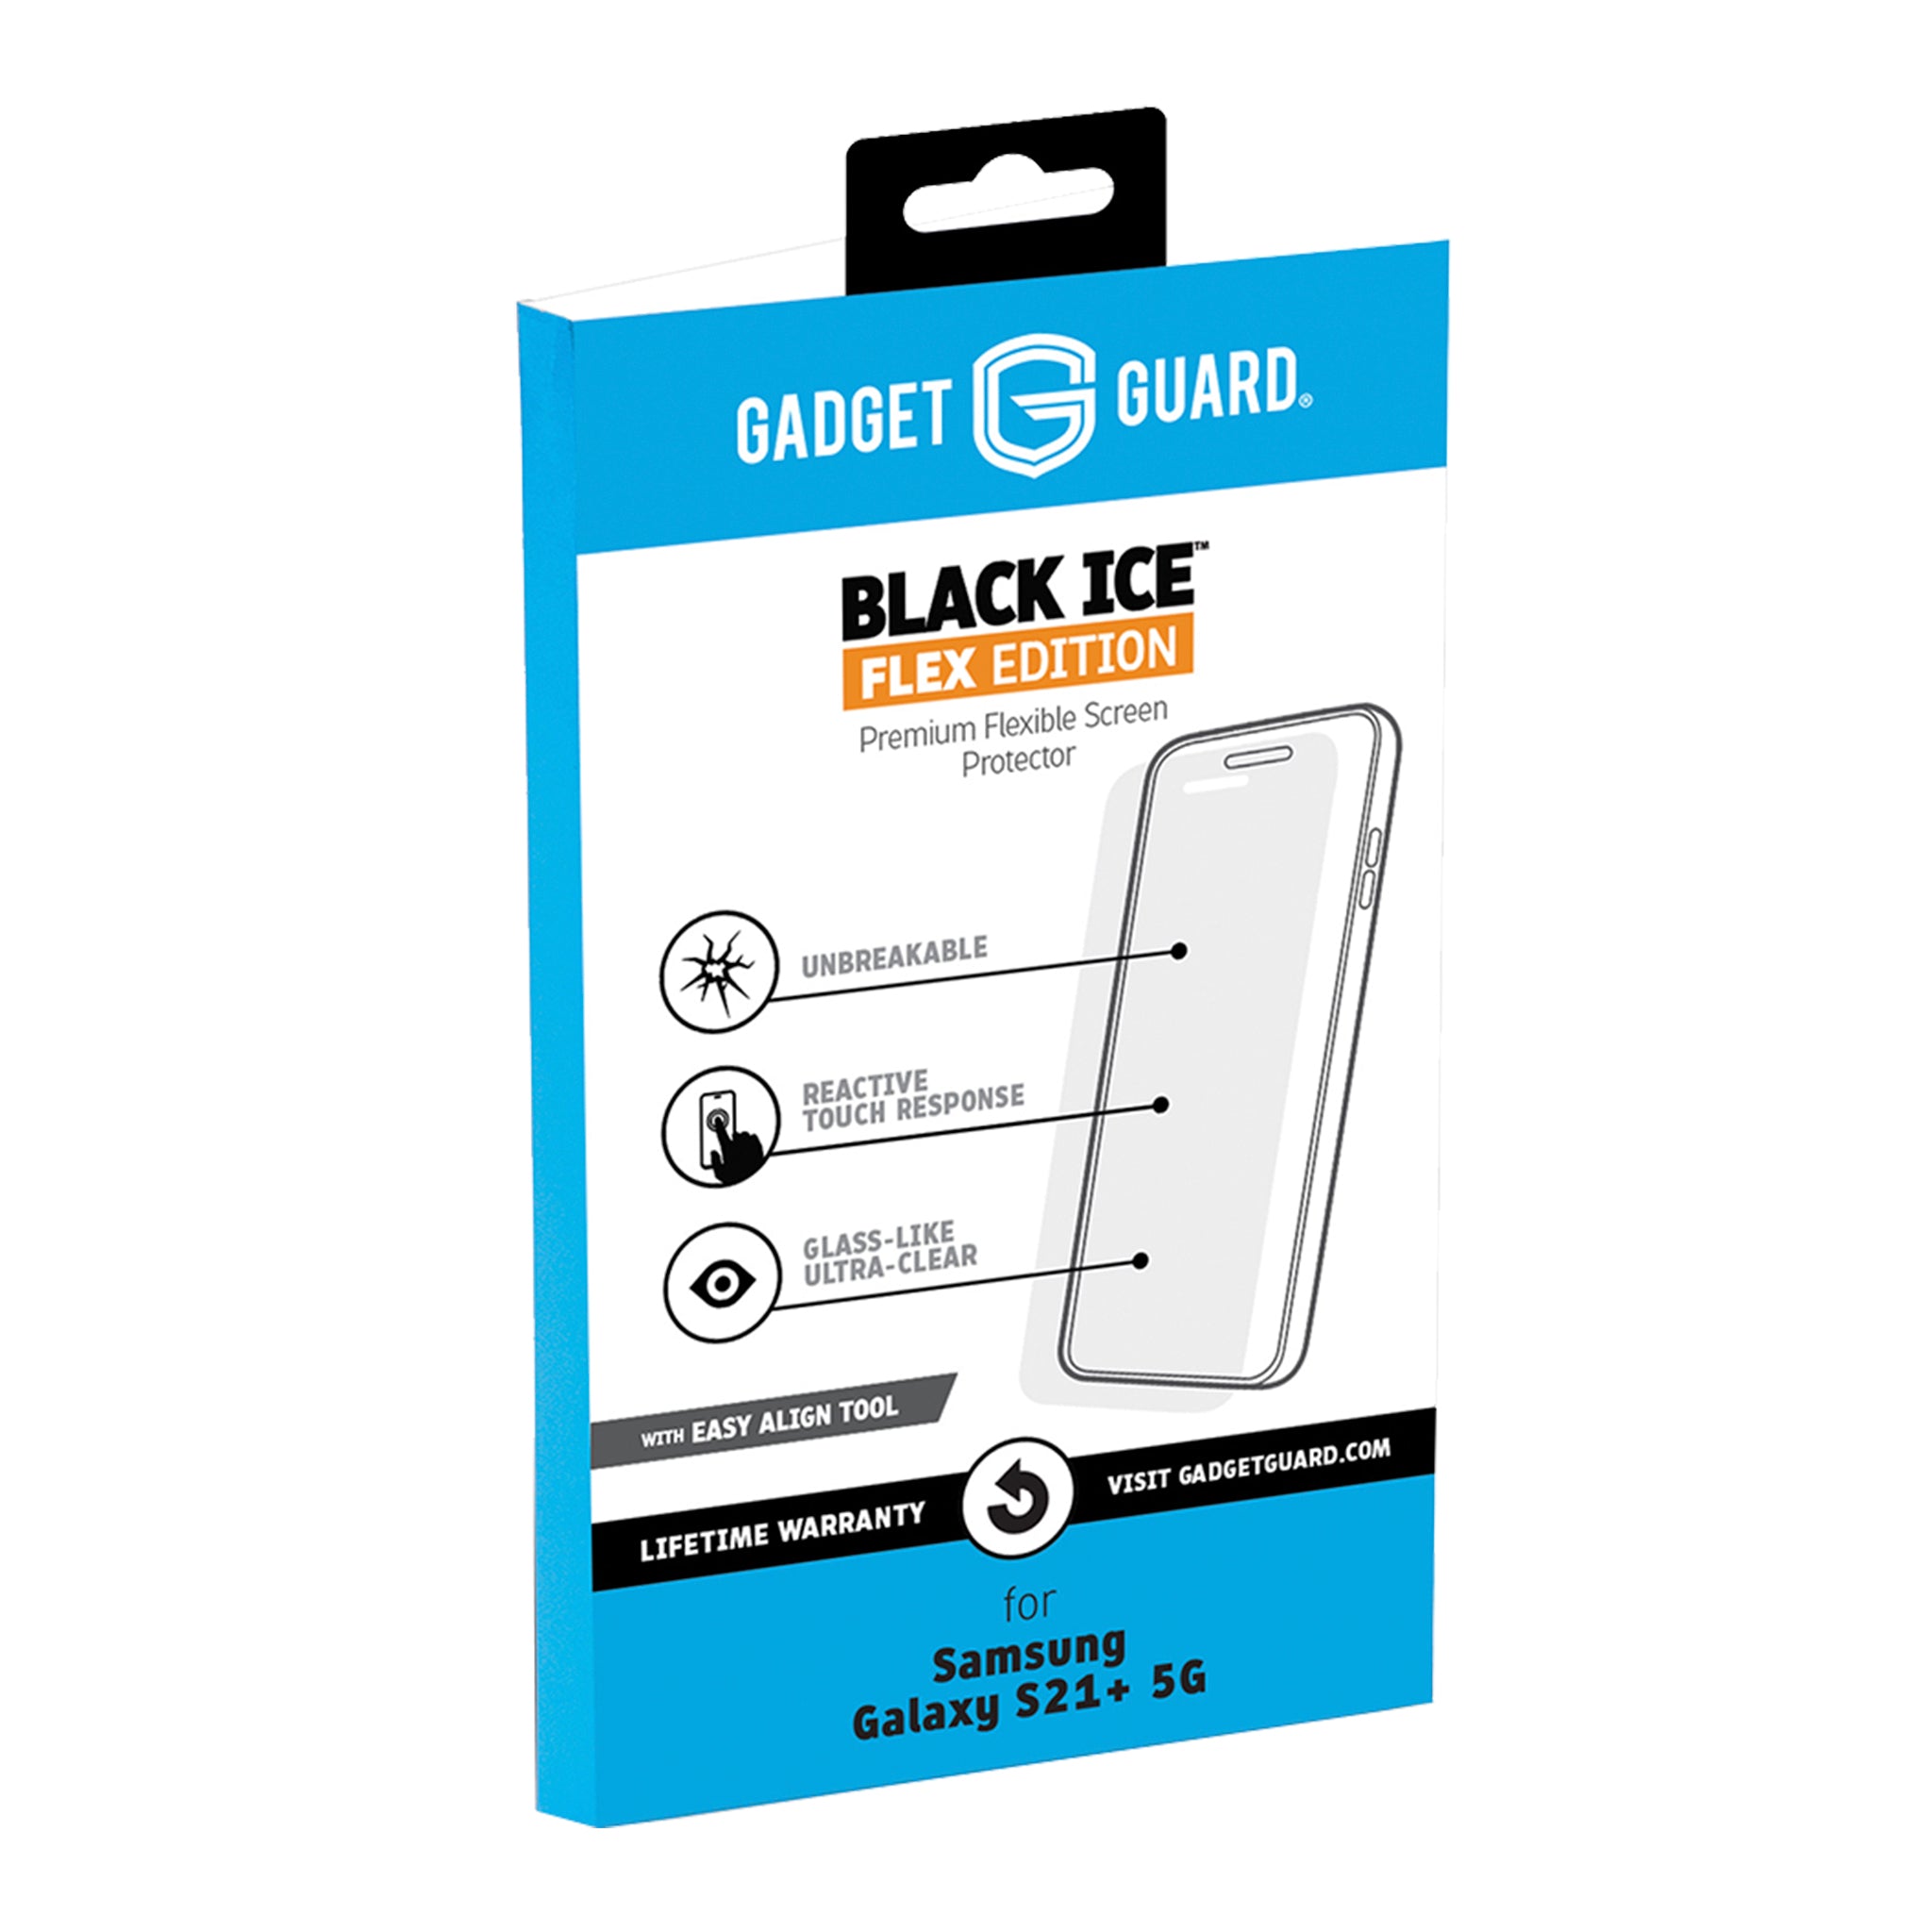 Gadget Guard - Black Ice Flex Screen Protector For Samsung Galaxy S21 Plus 5g - Clear